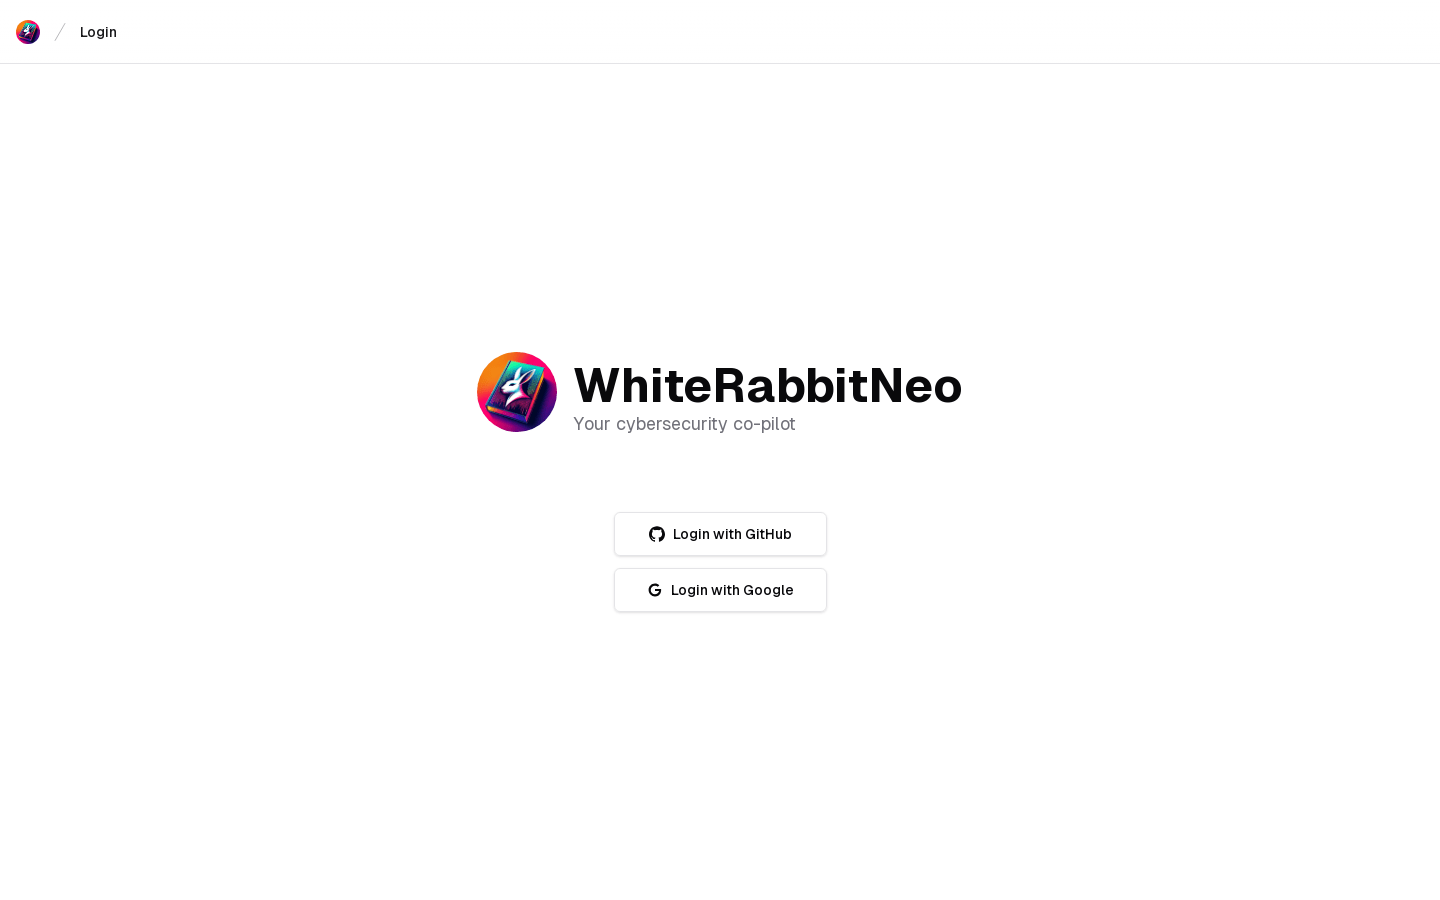 WhiteRabbitNeo